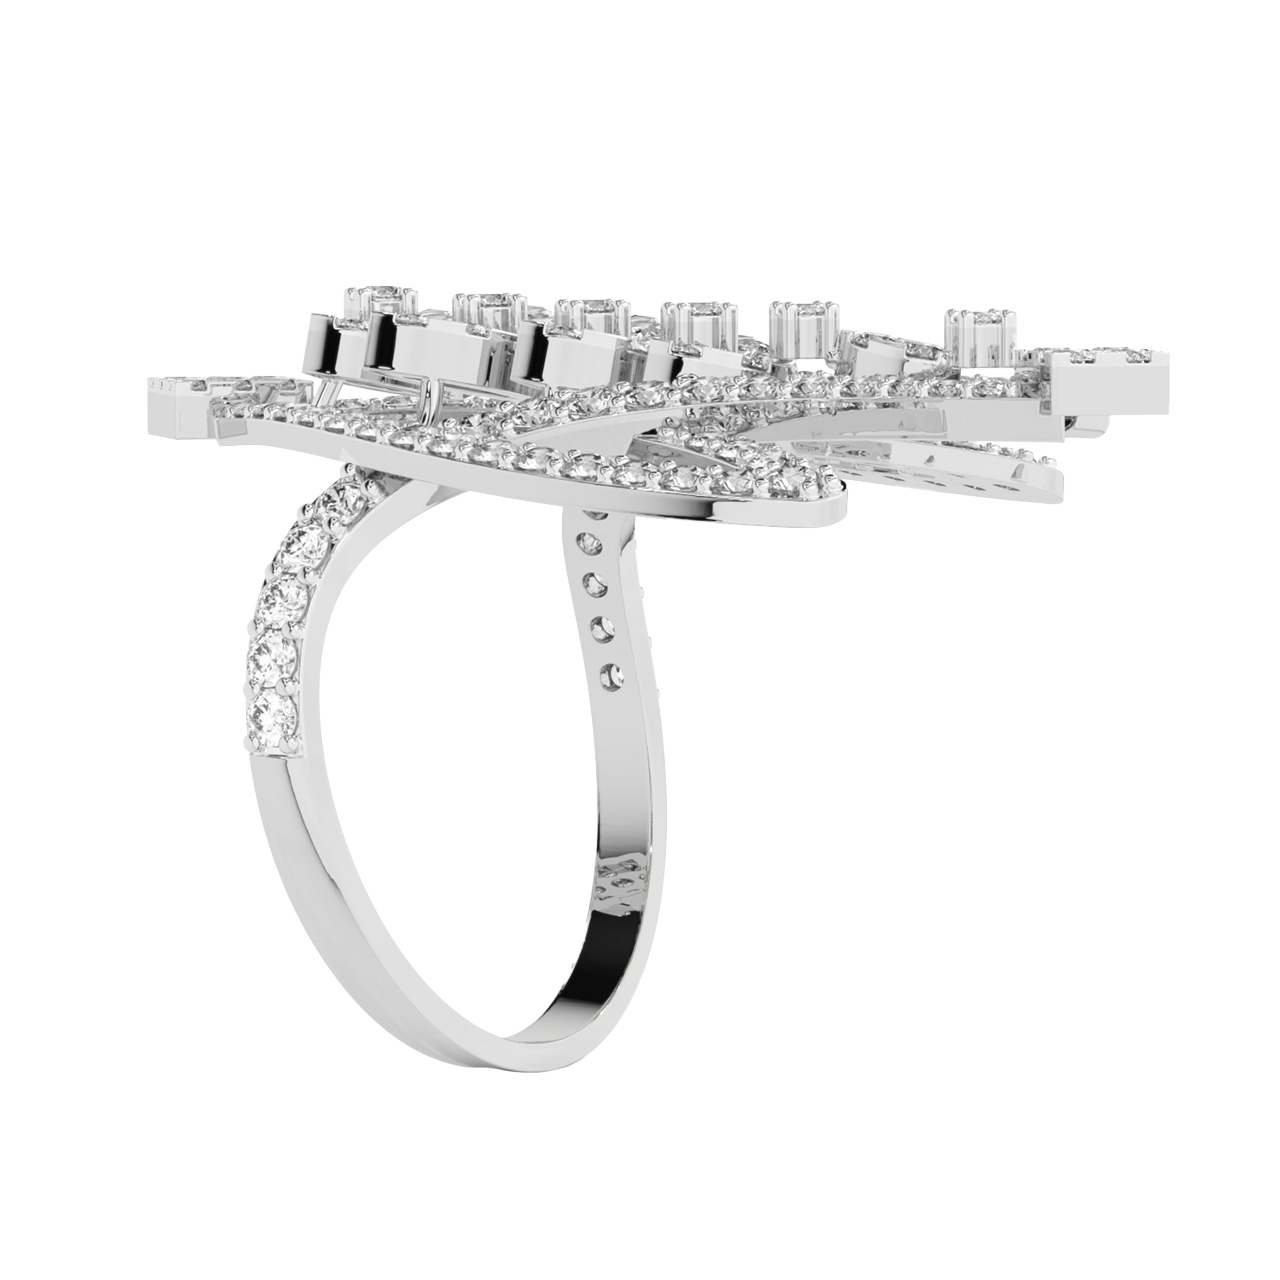 The Fishy Style Diamond Ring